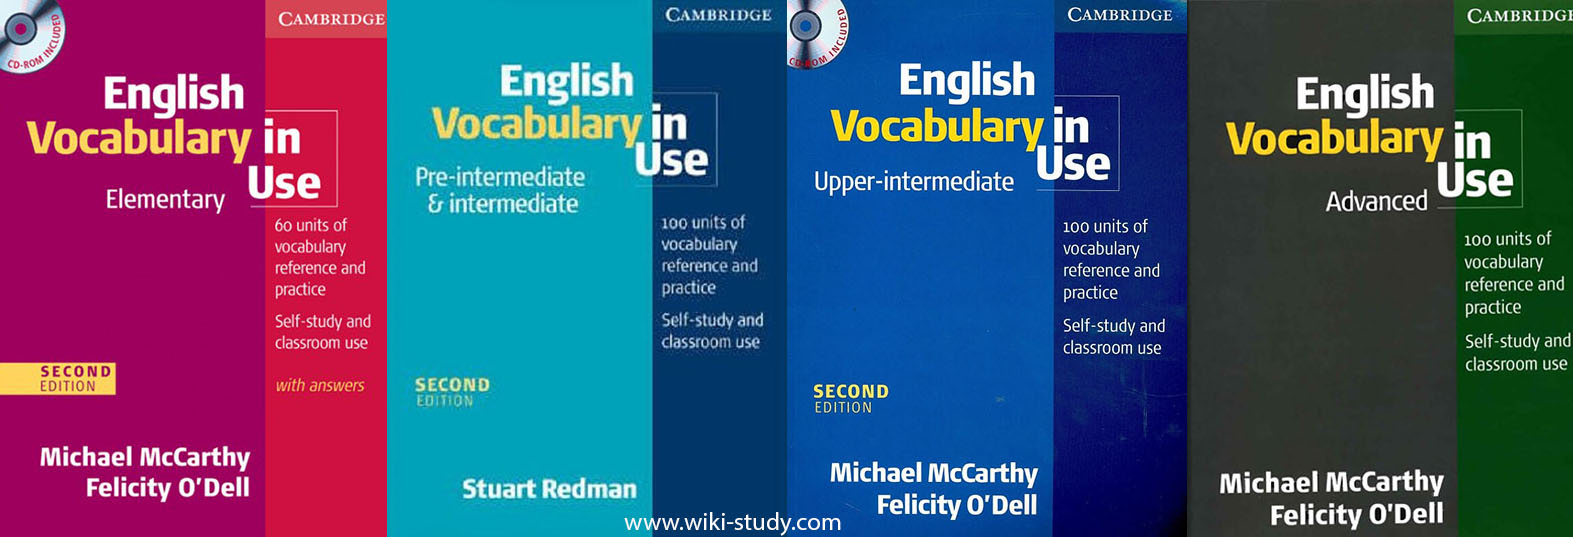 English Vocabulary In Use full set